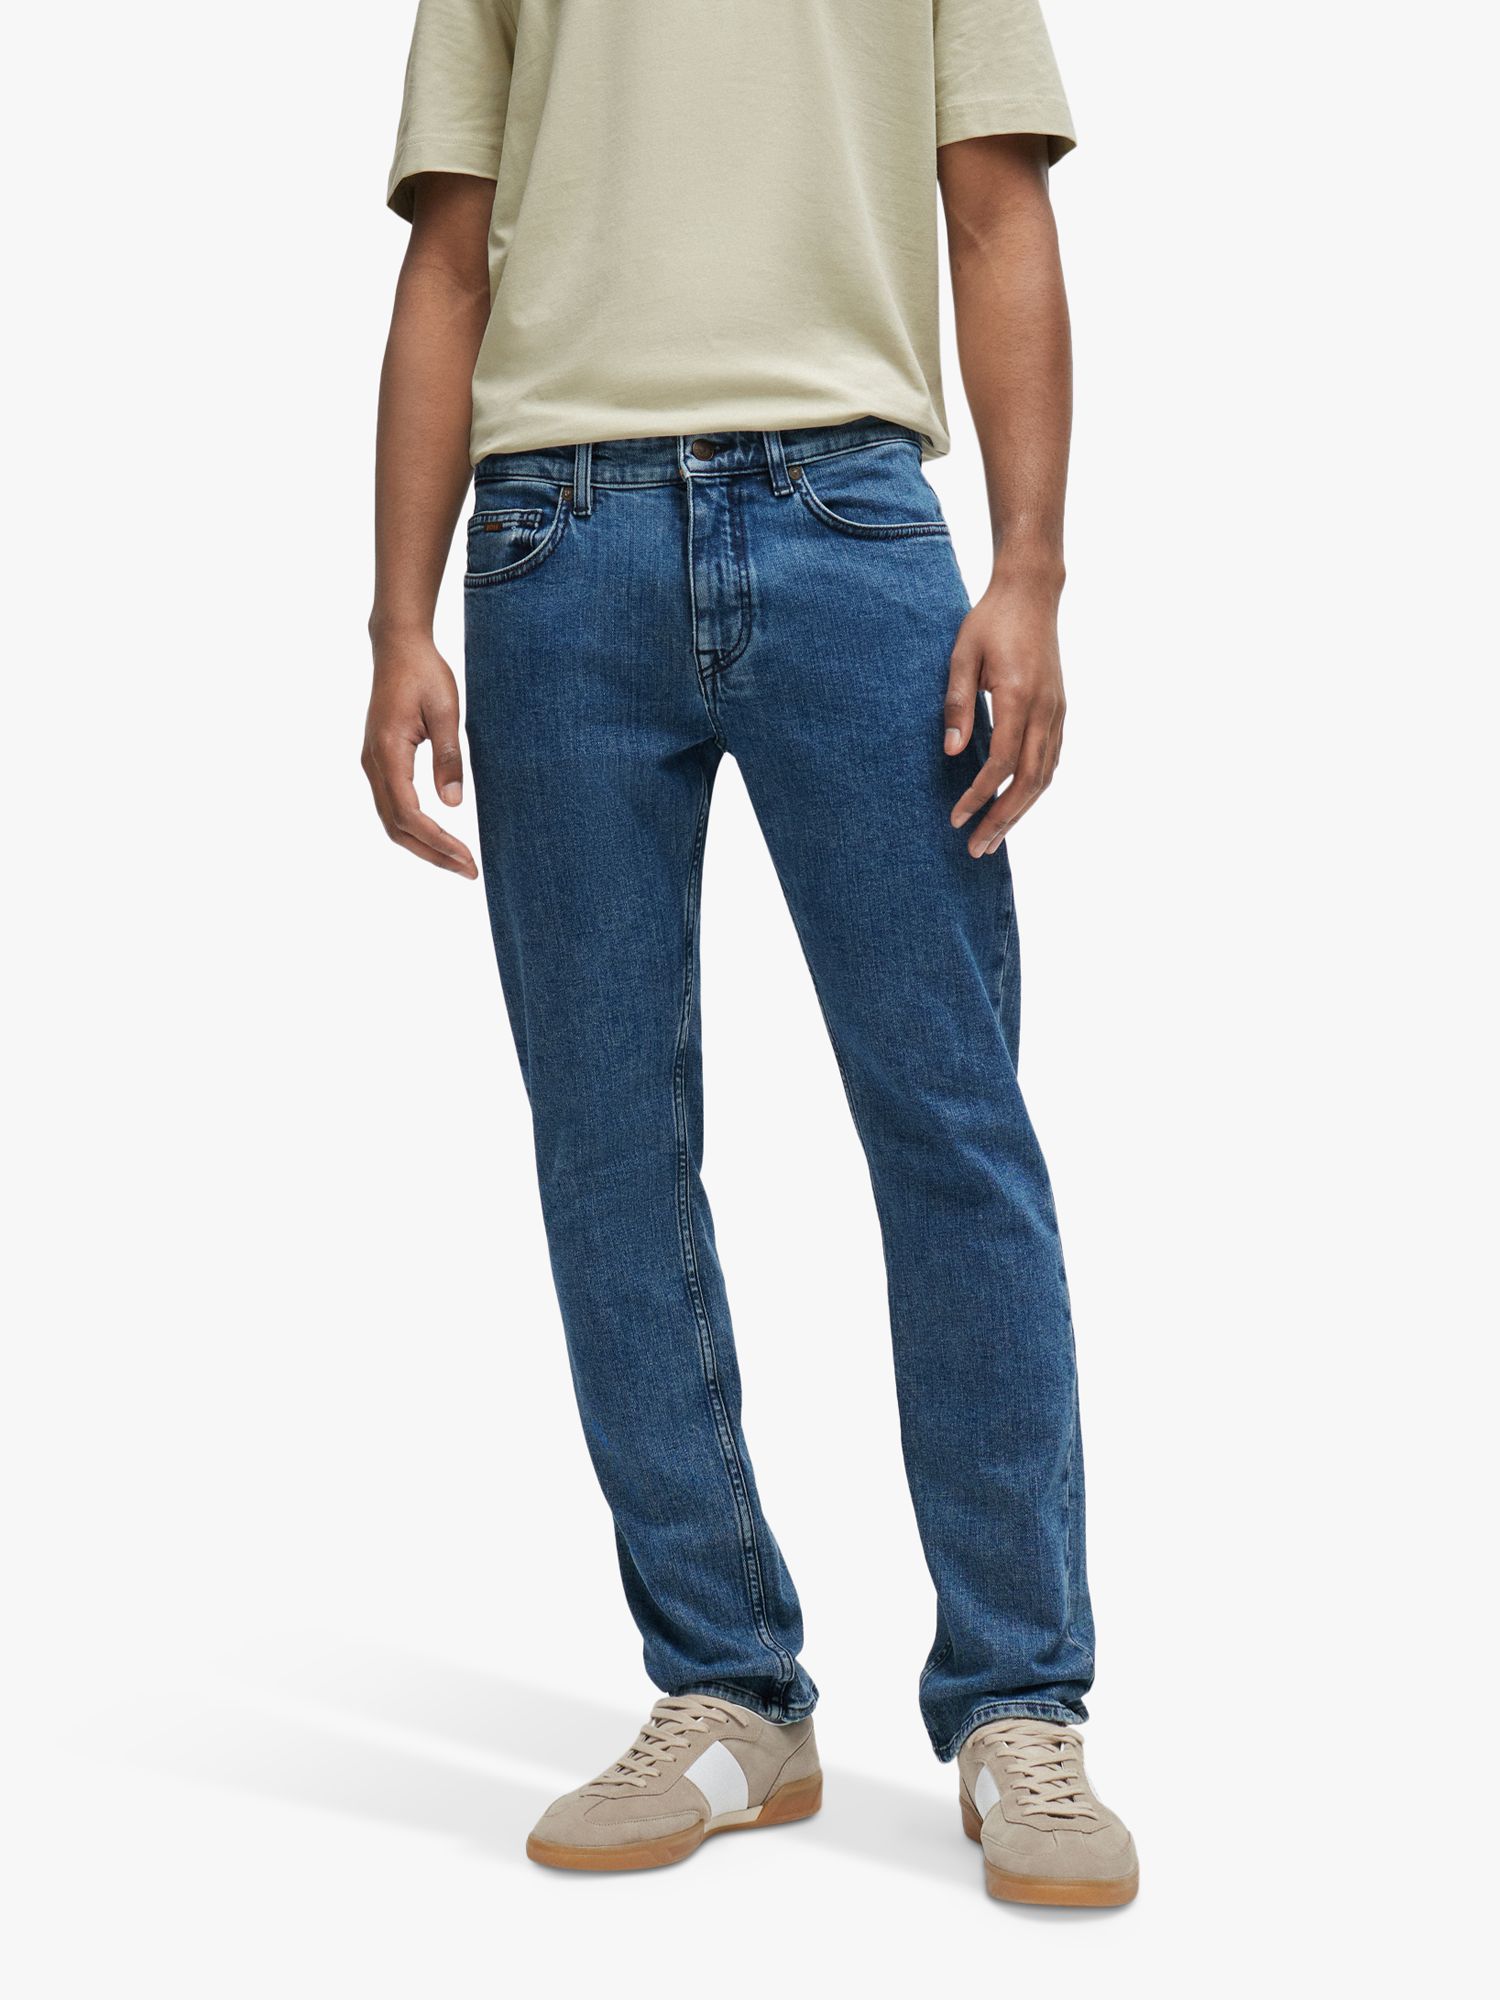 BOSS Delaware Cotton Blend Jeans, Medium Blue, 34R